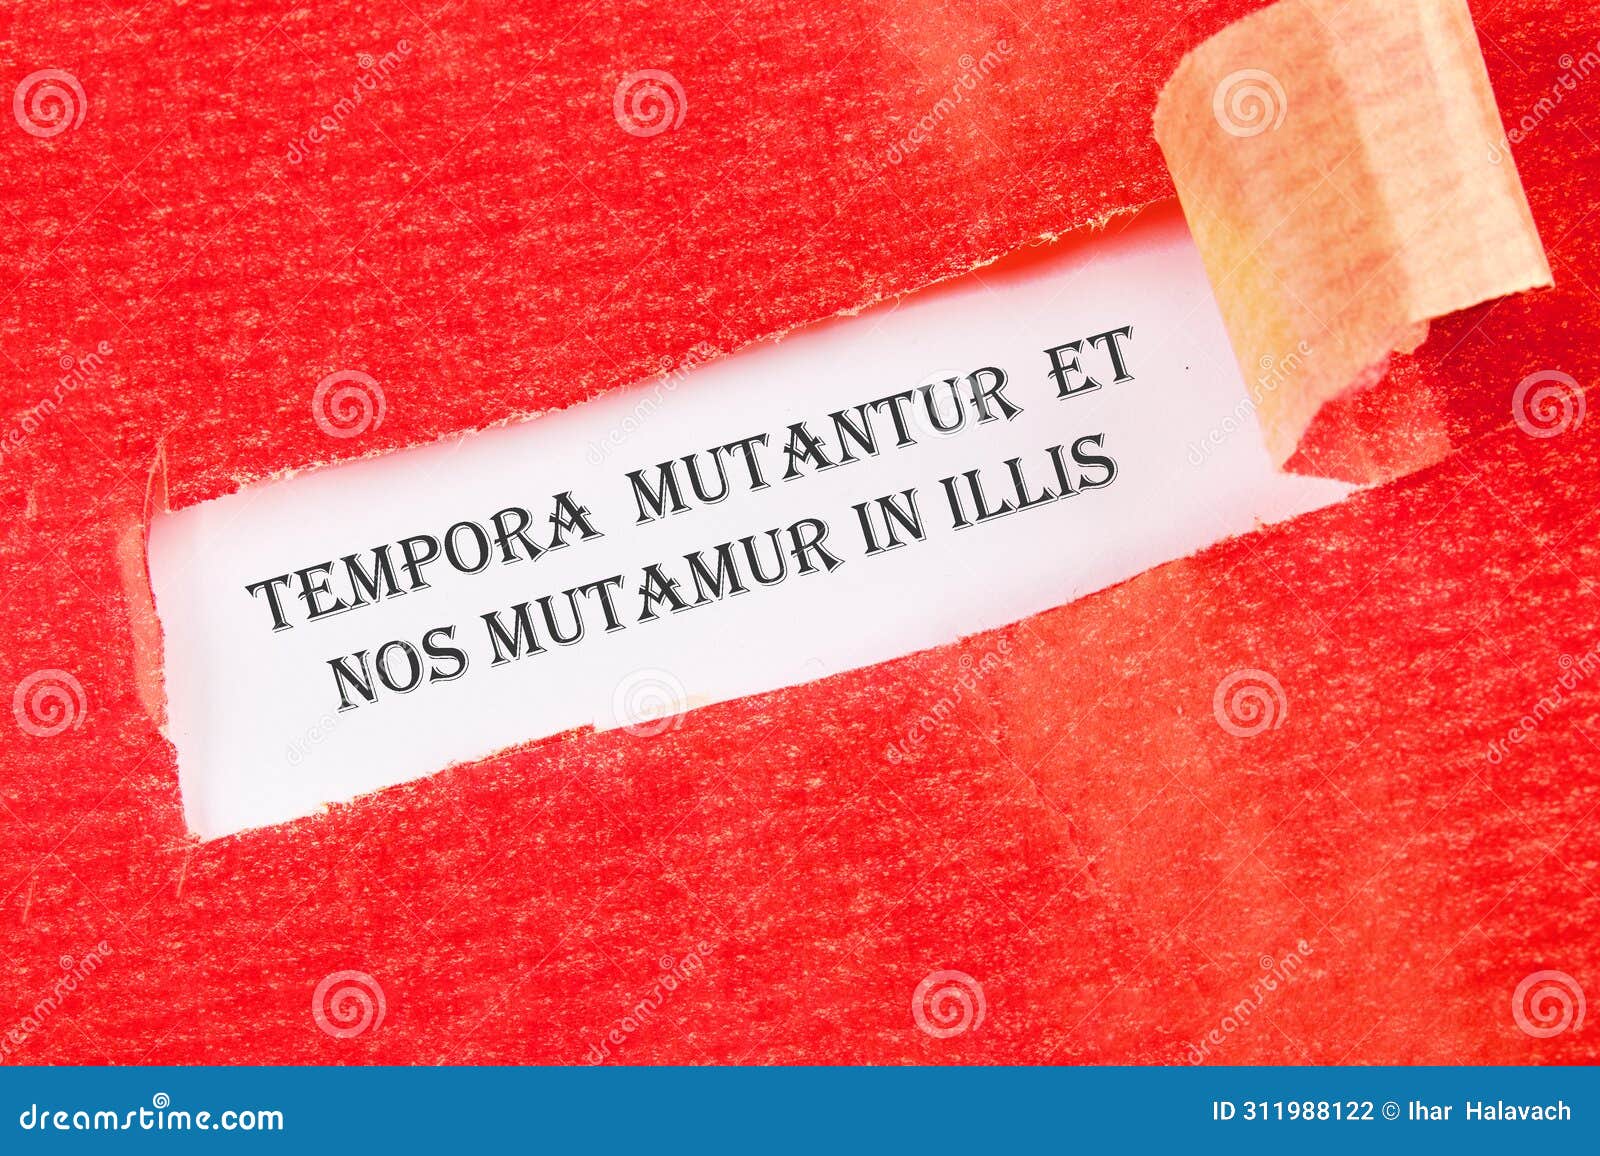 tempora mutantur et nos mutamur in illis translated from latin, it means times